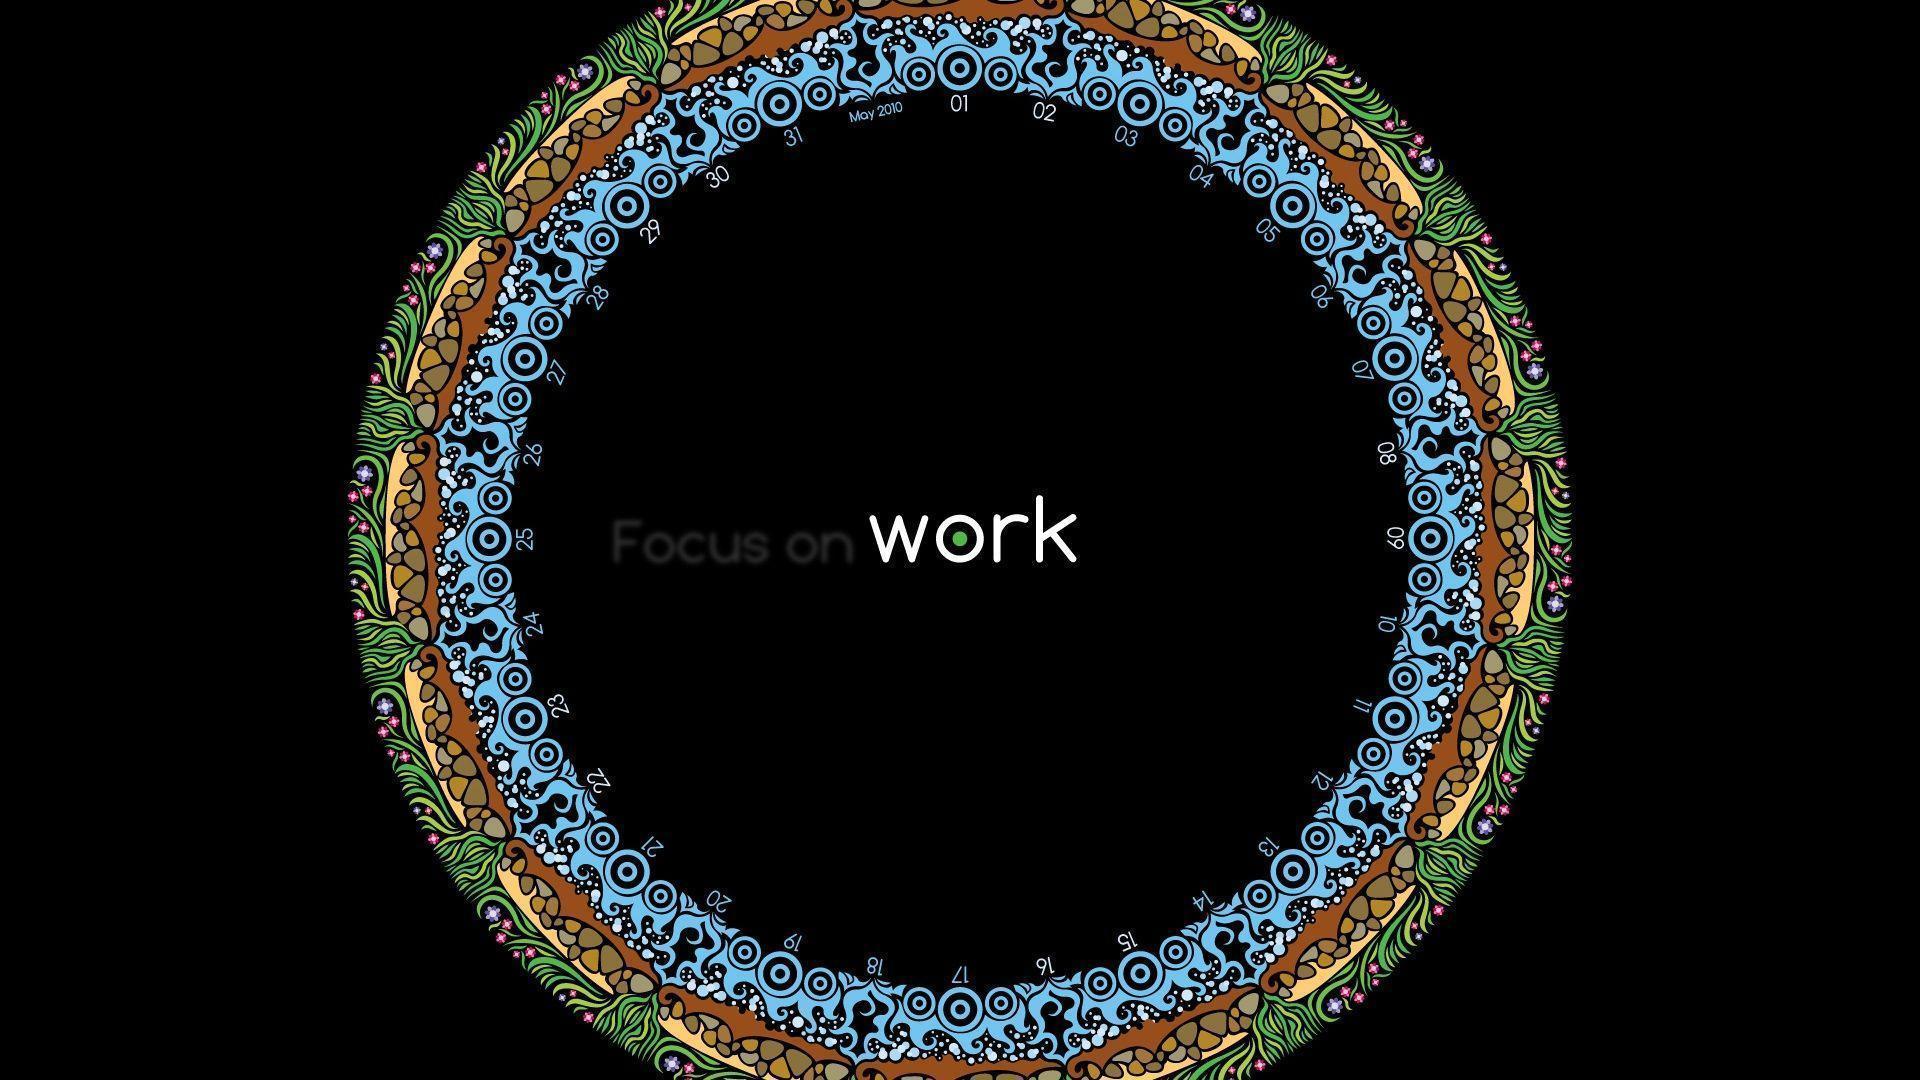 Focus on work desktop PC and Mac wallpaper